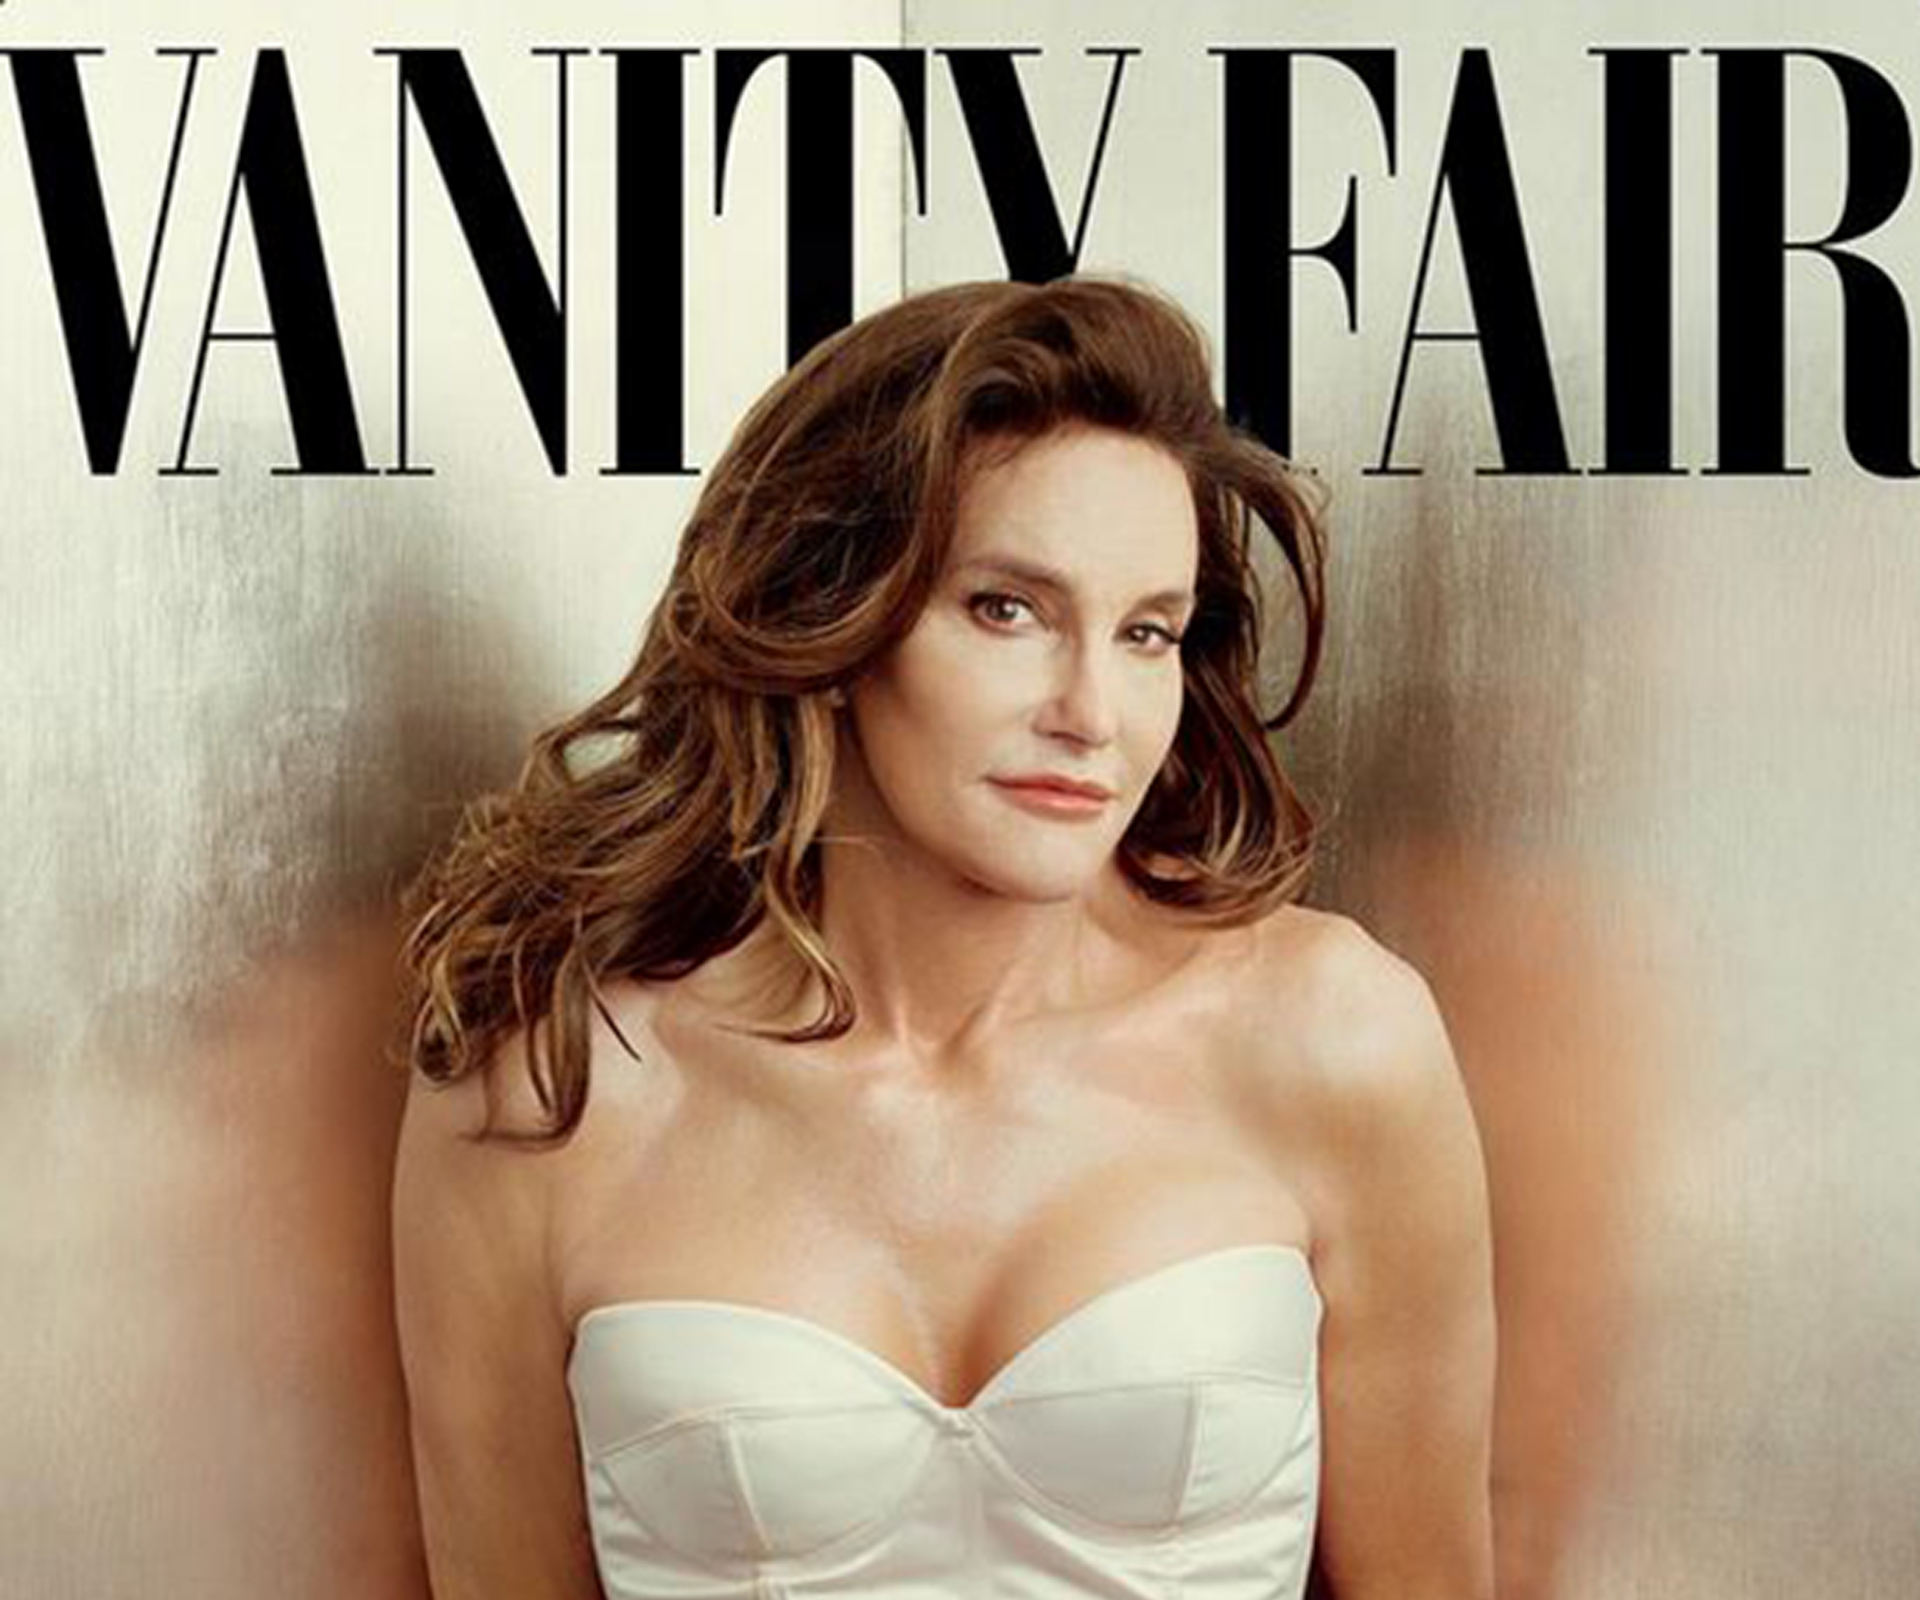 Caitlyn Jenner makes debut on Vanity Fair cover